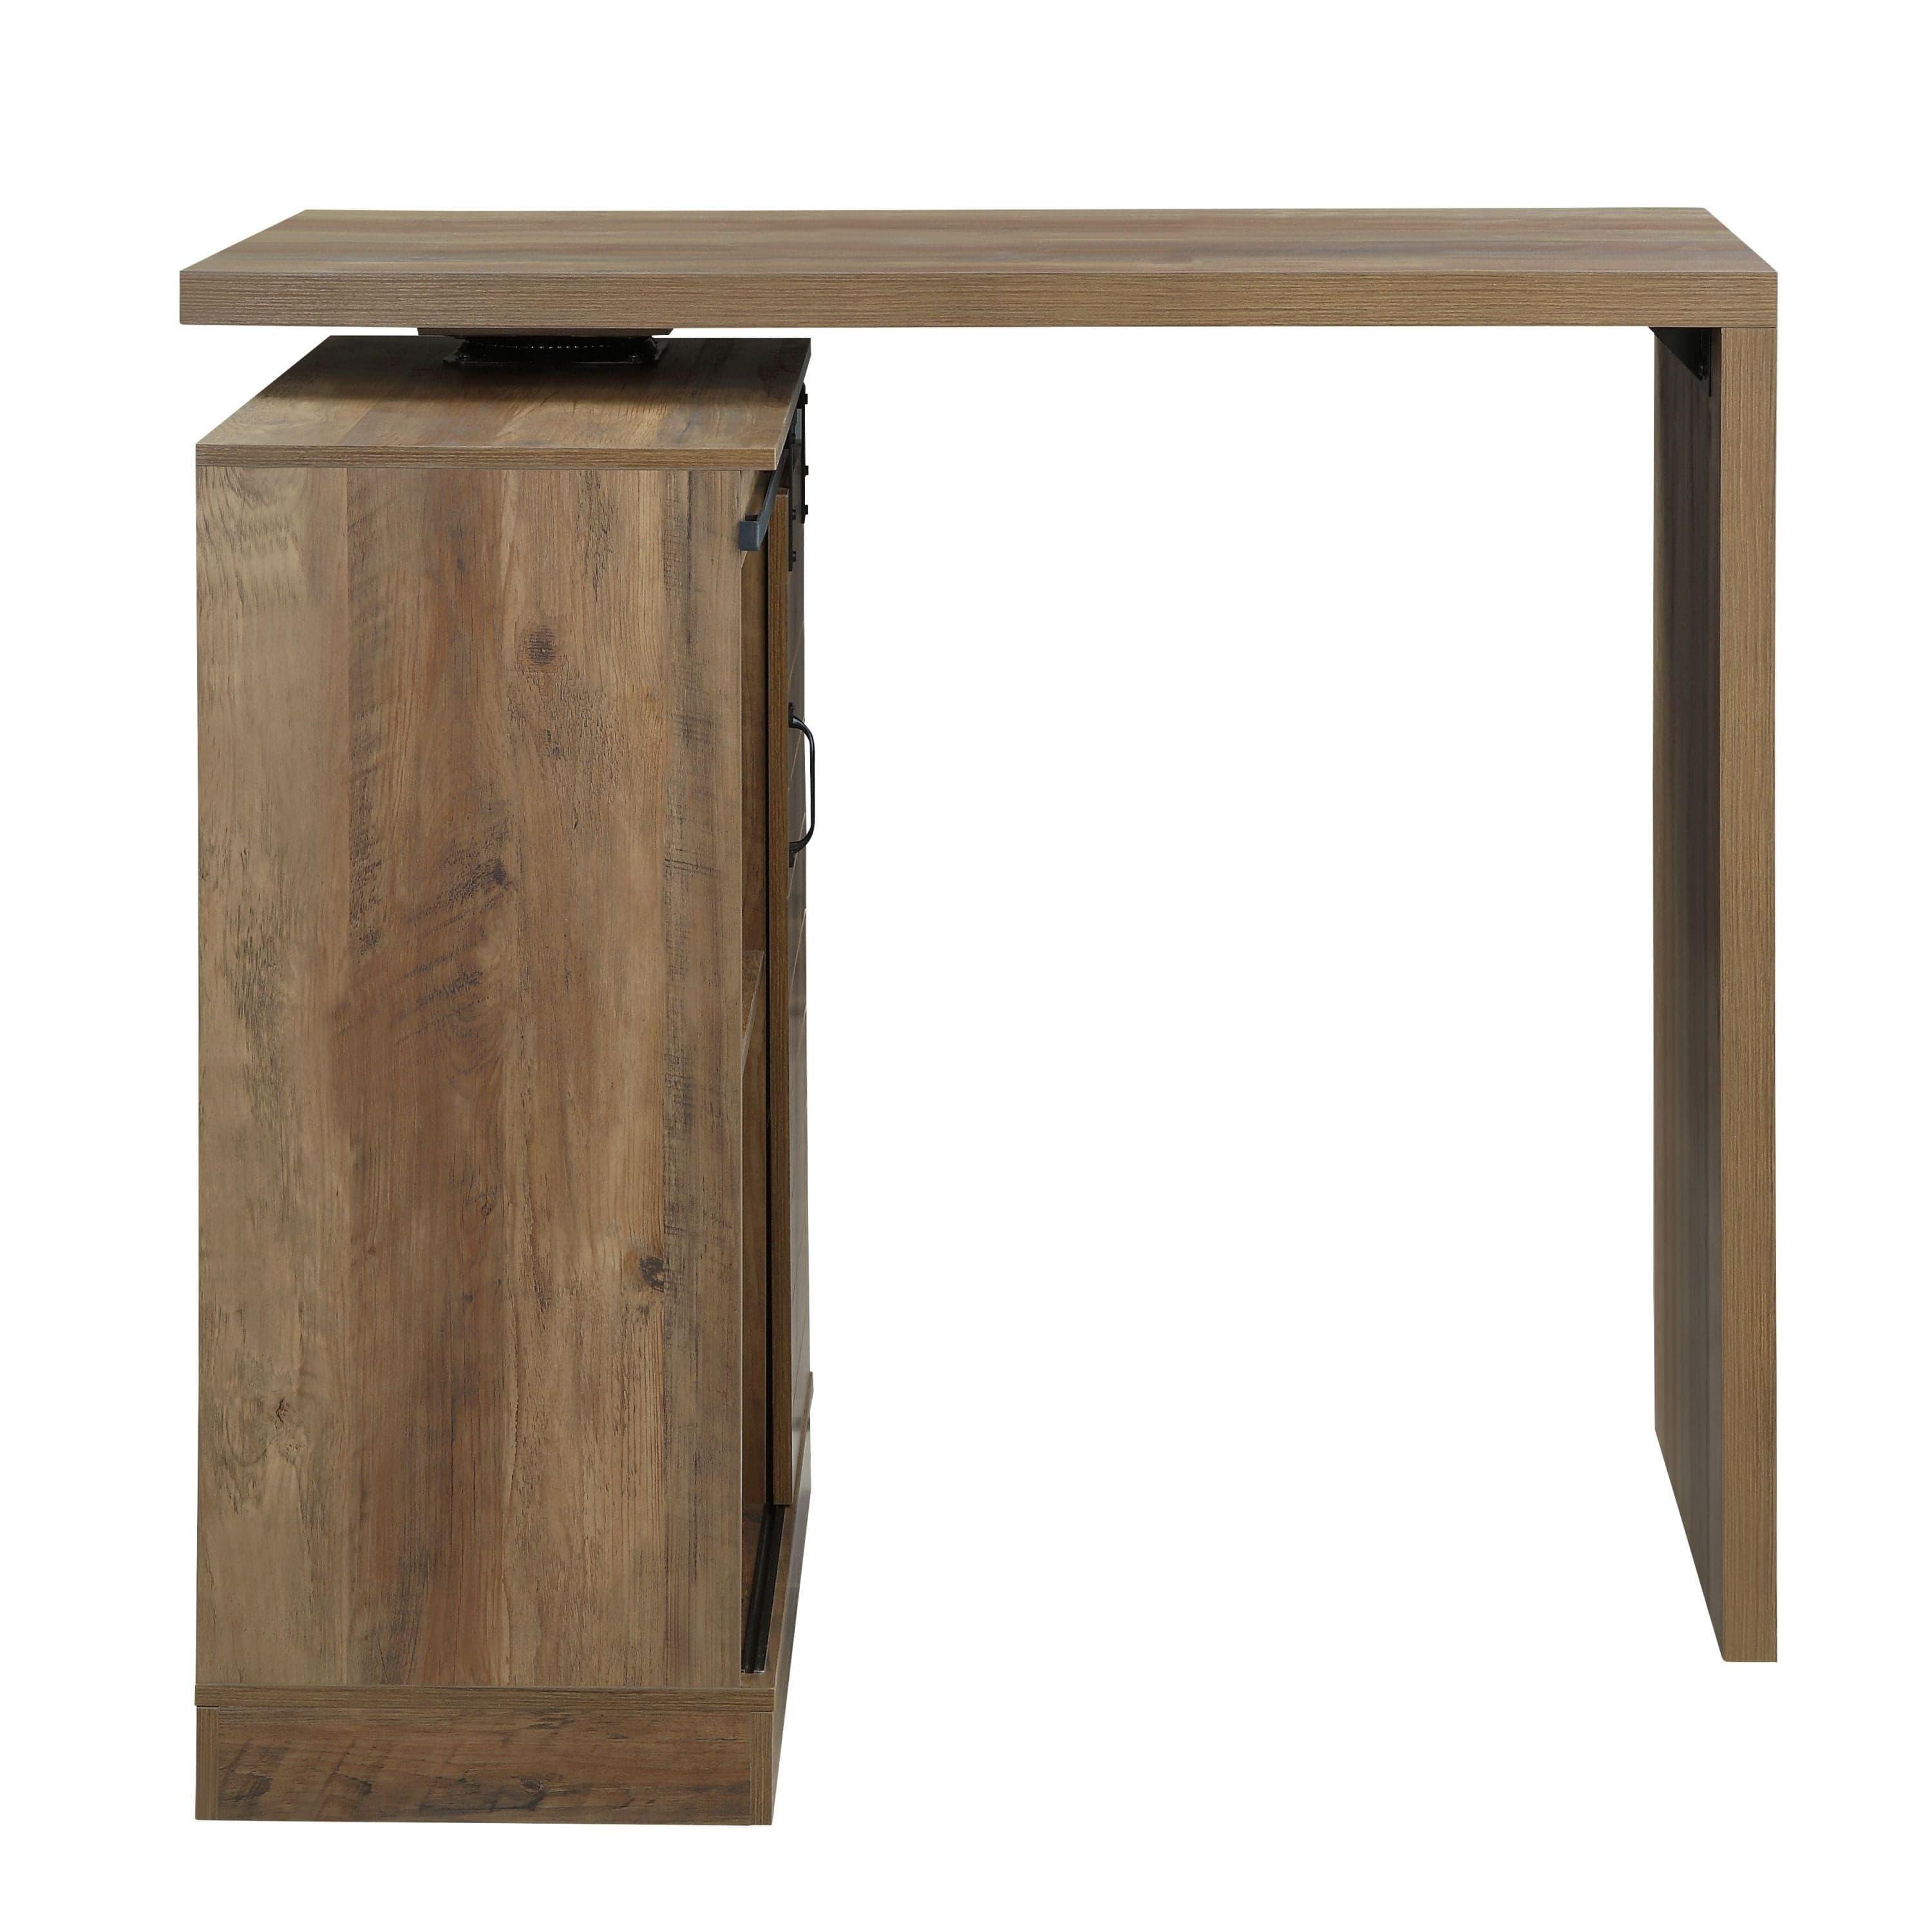 Shop ACME Quillon Bar Table, Rustic Oak Finish DN00153 Mademoiselle Home Decor